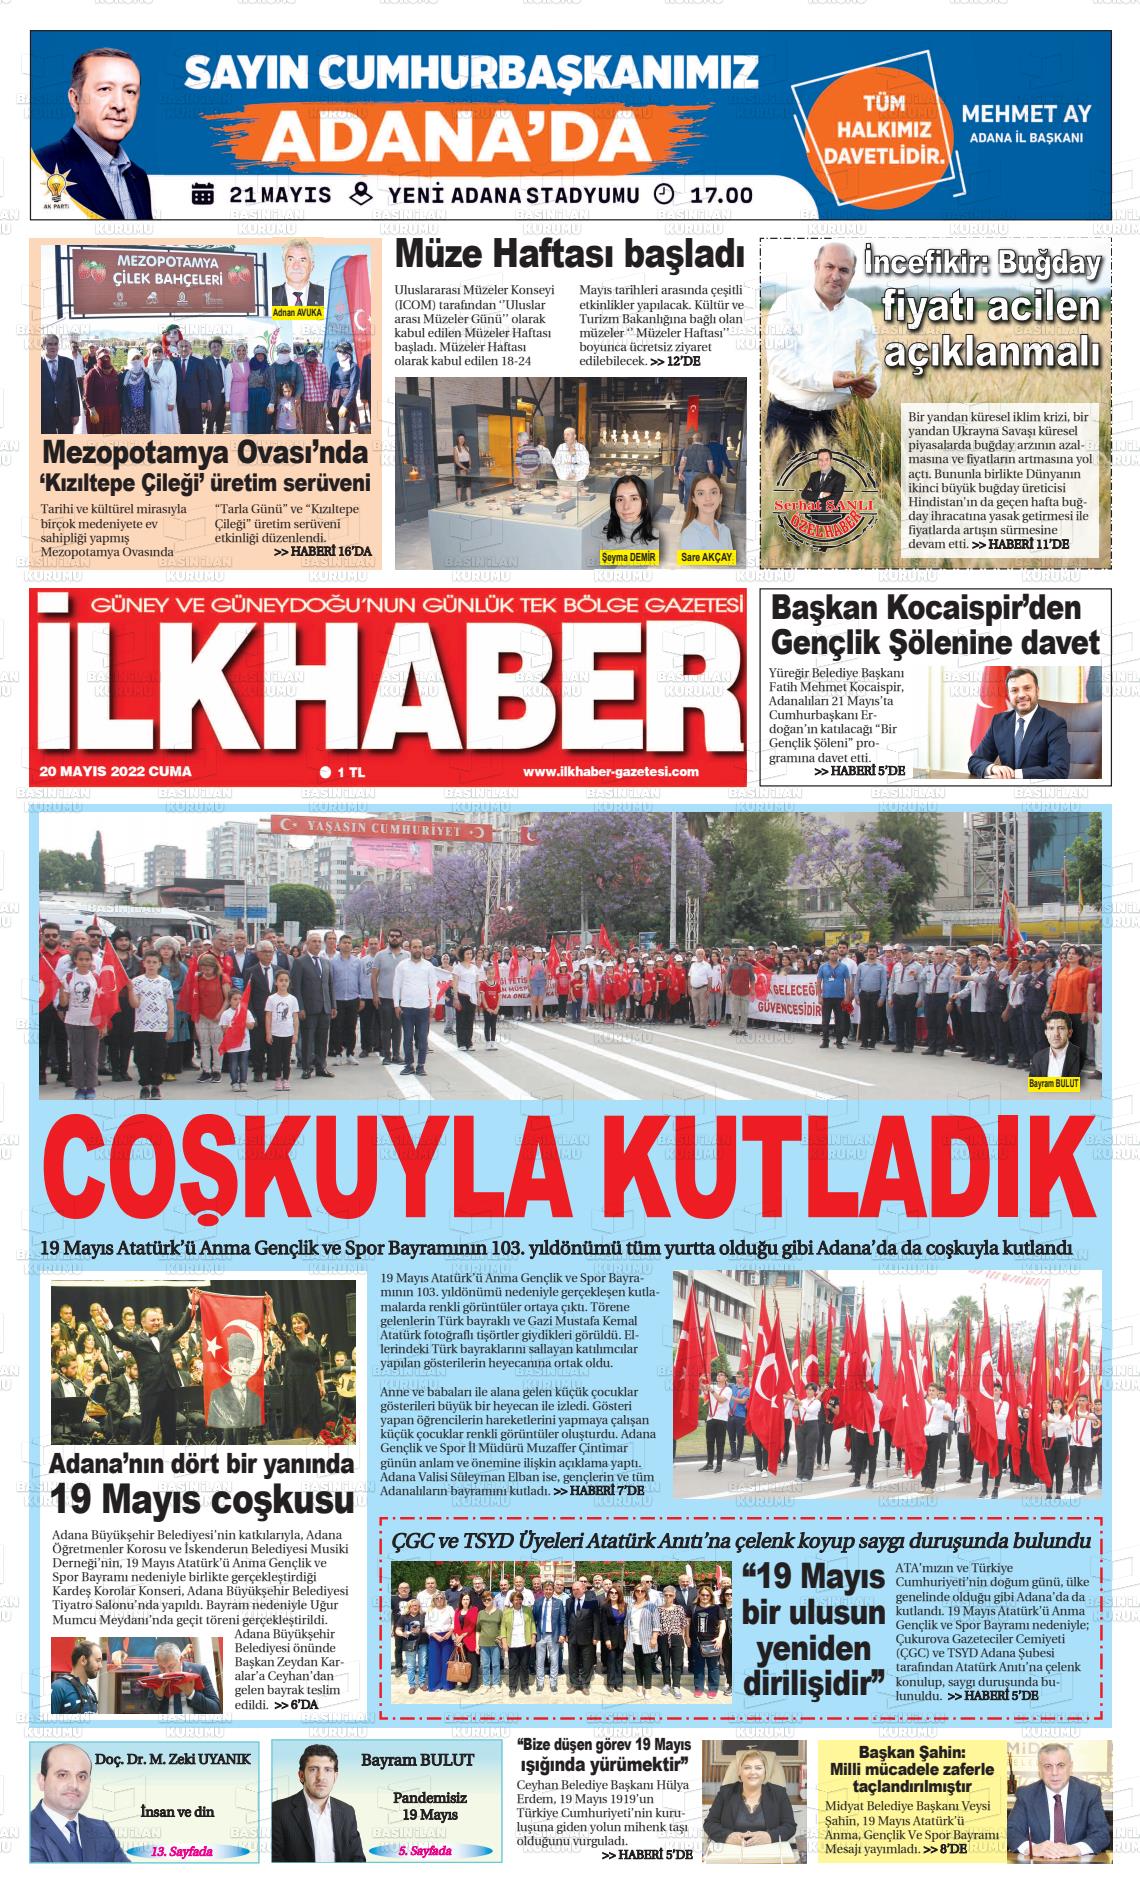 20 Mayıs 2022 İlk Haber Gazete Manşeti